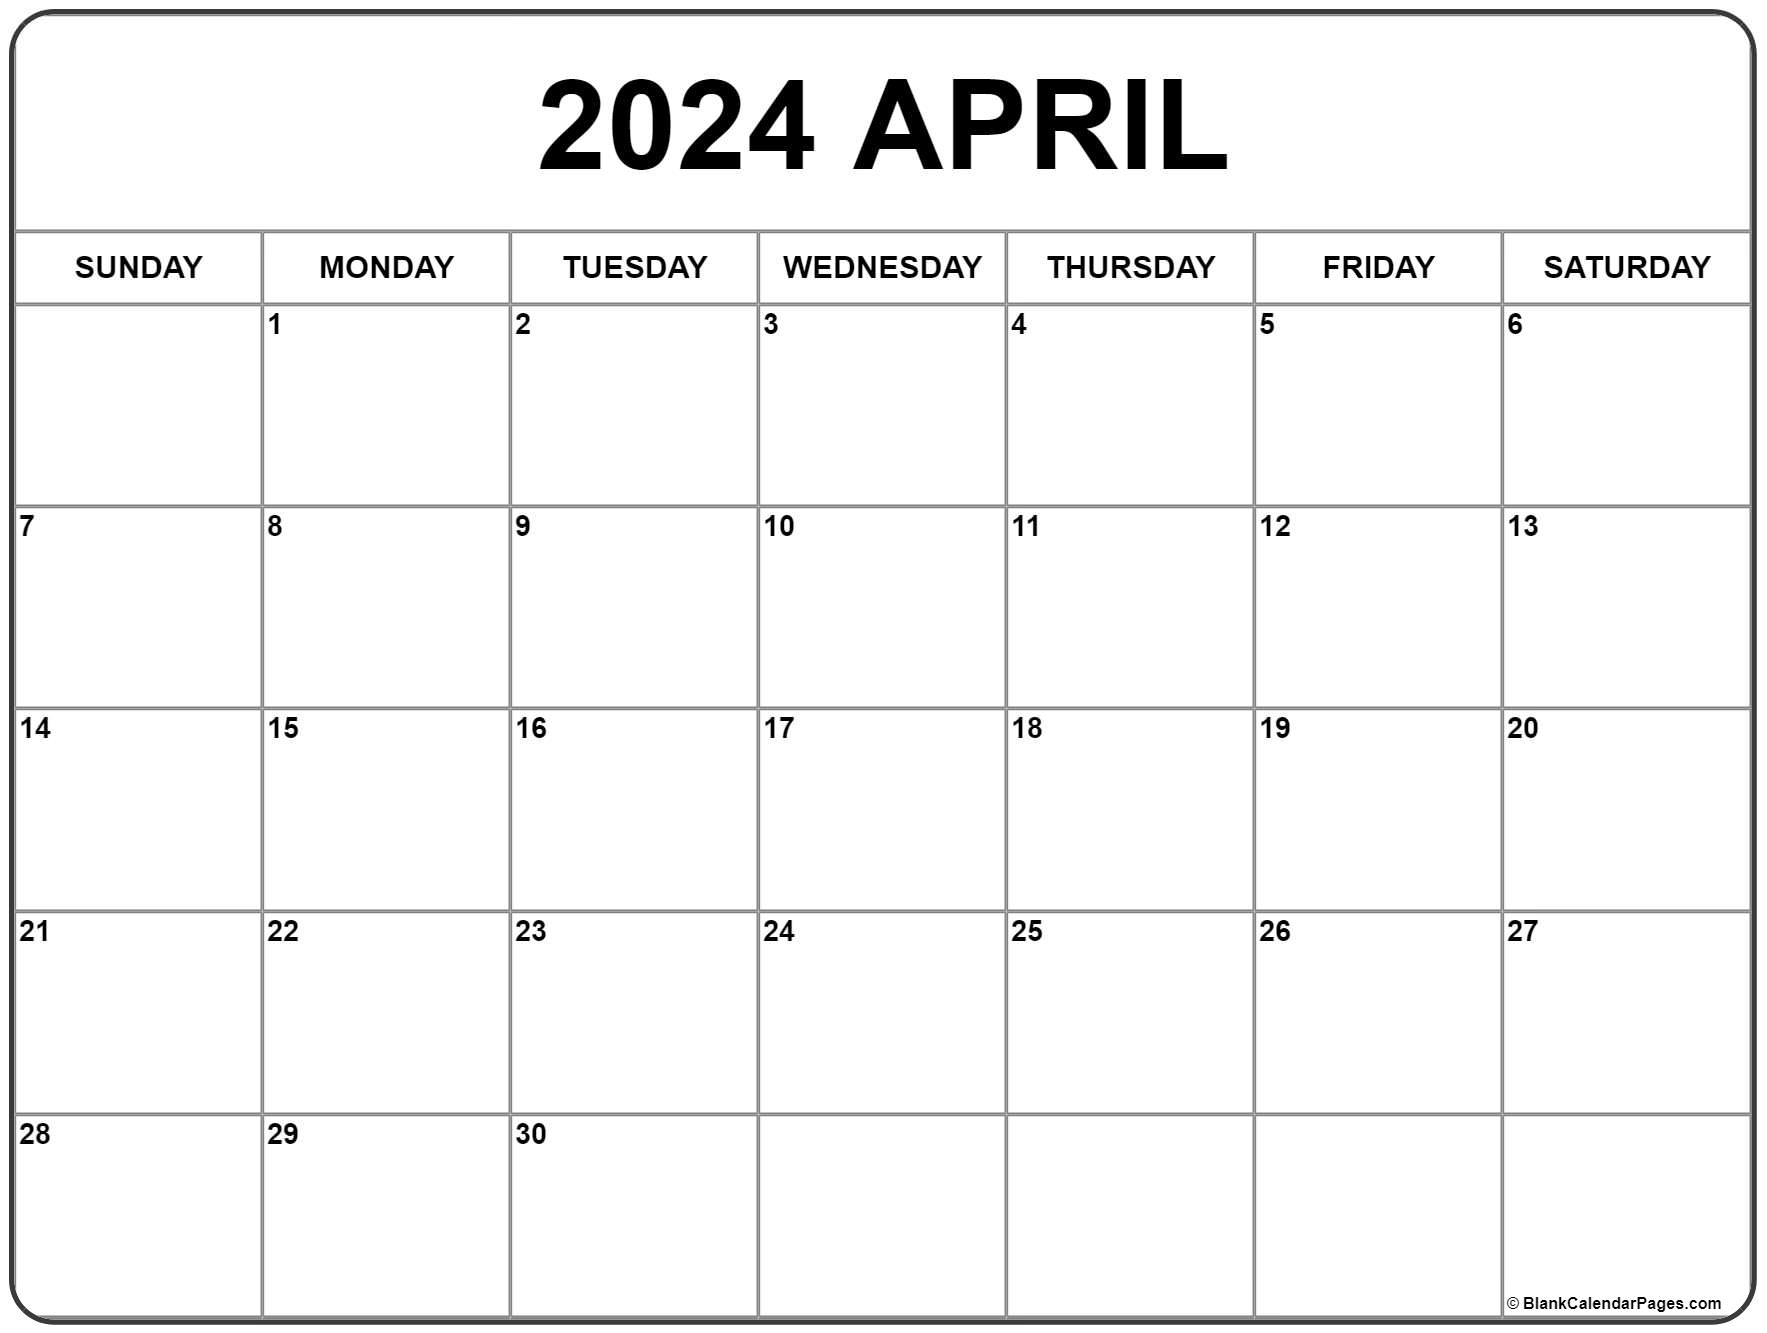 April 2024 Calendar | Free Printable Calendar with April 2024 Month Calendar